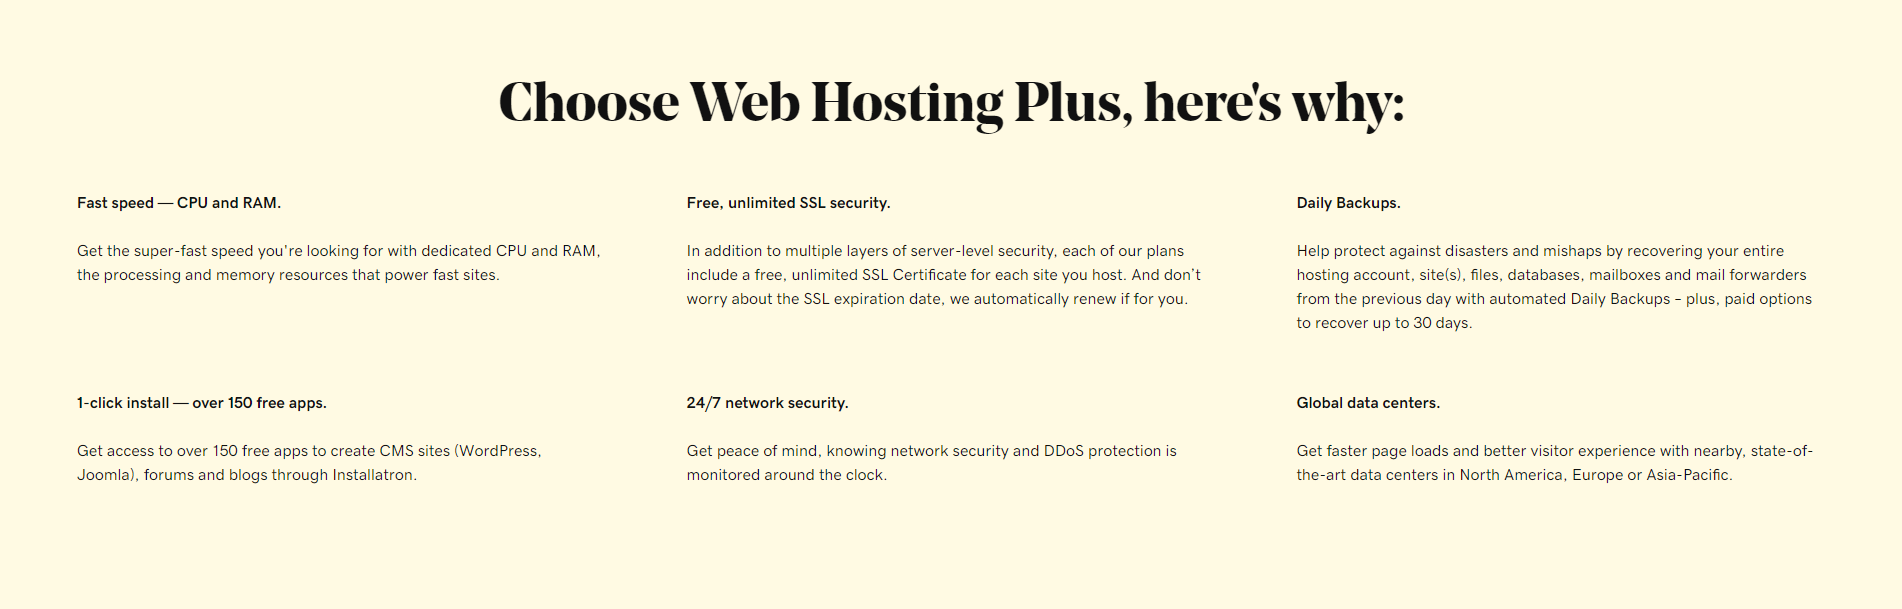 GoDaddy web hosting plus features